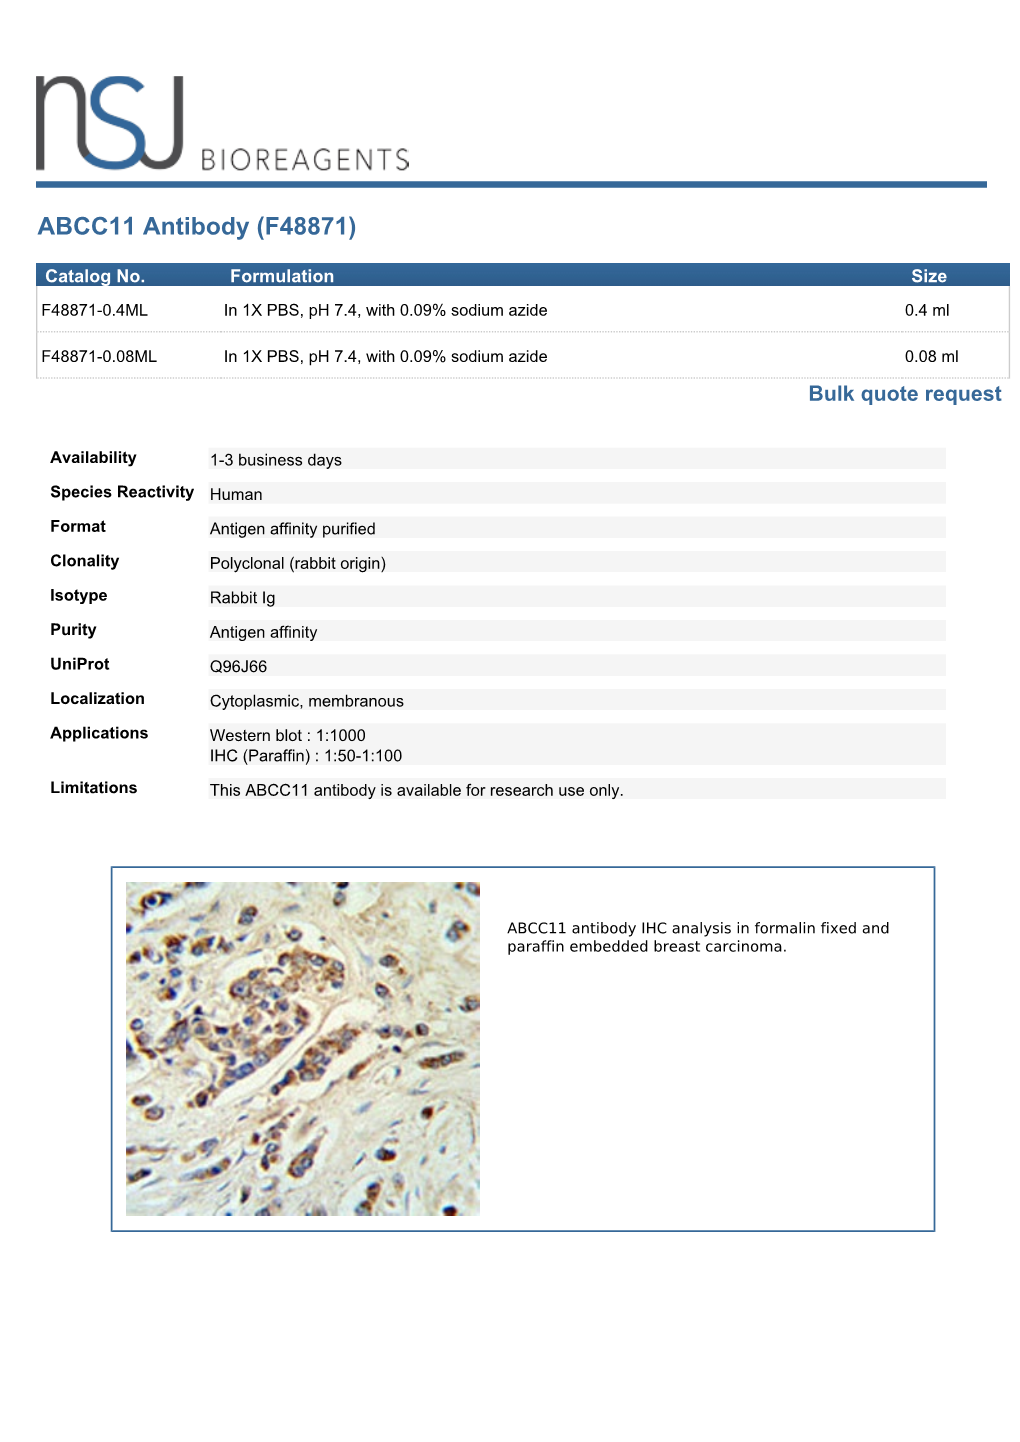 ABCC11 Antibody (F48871)